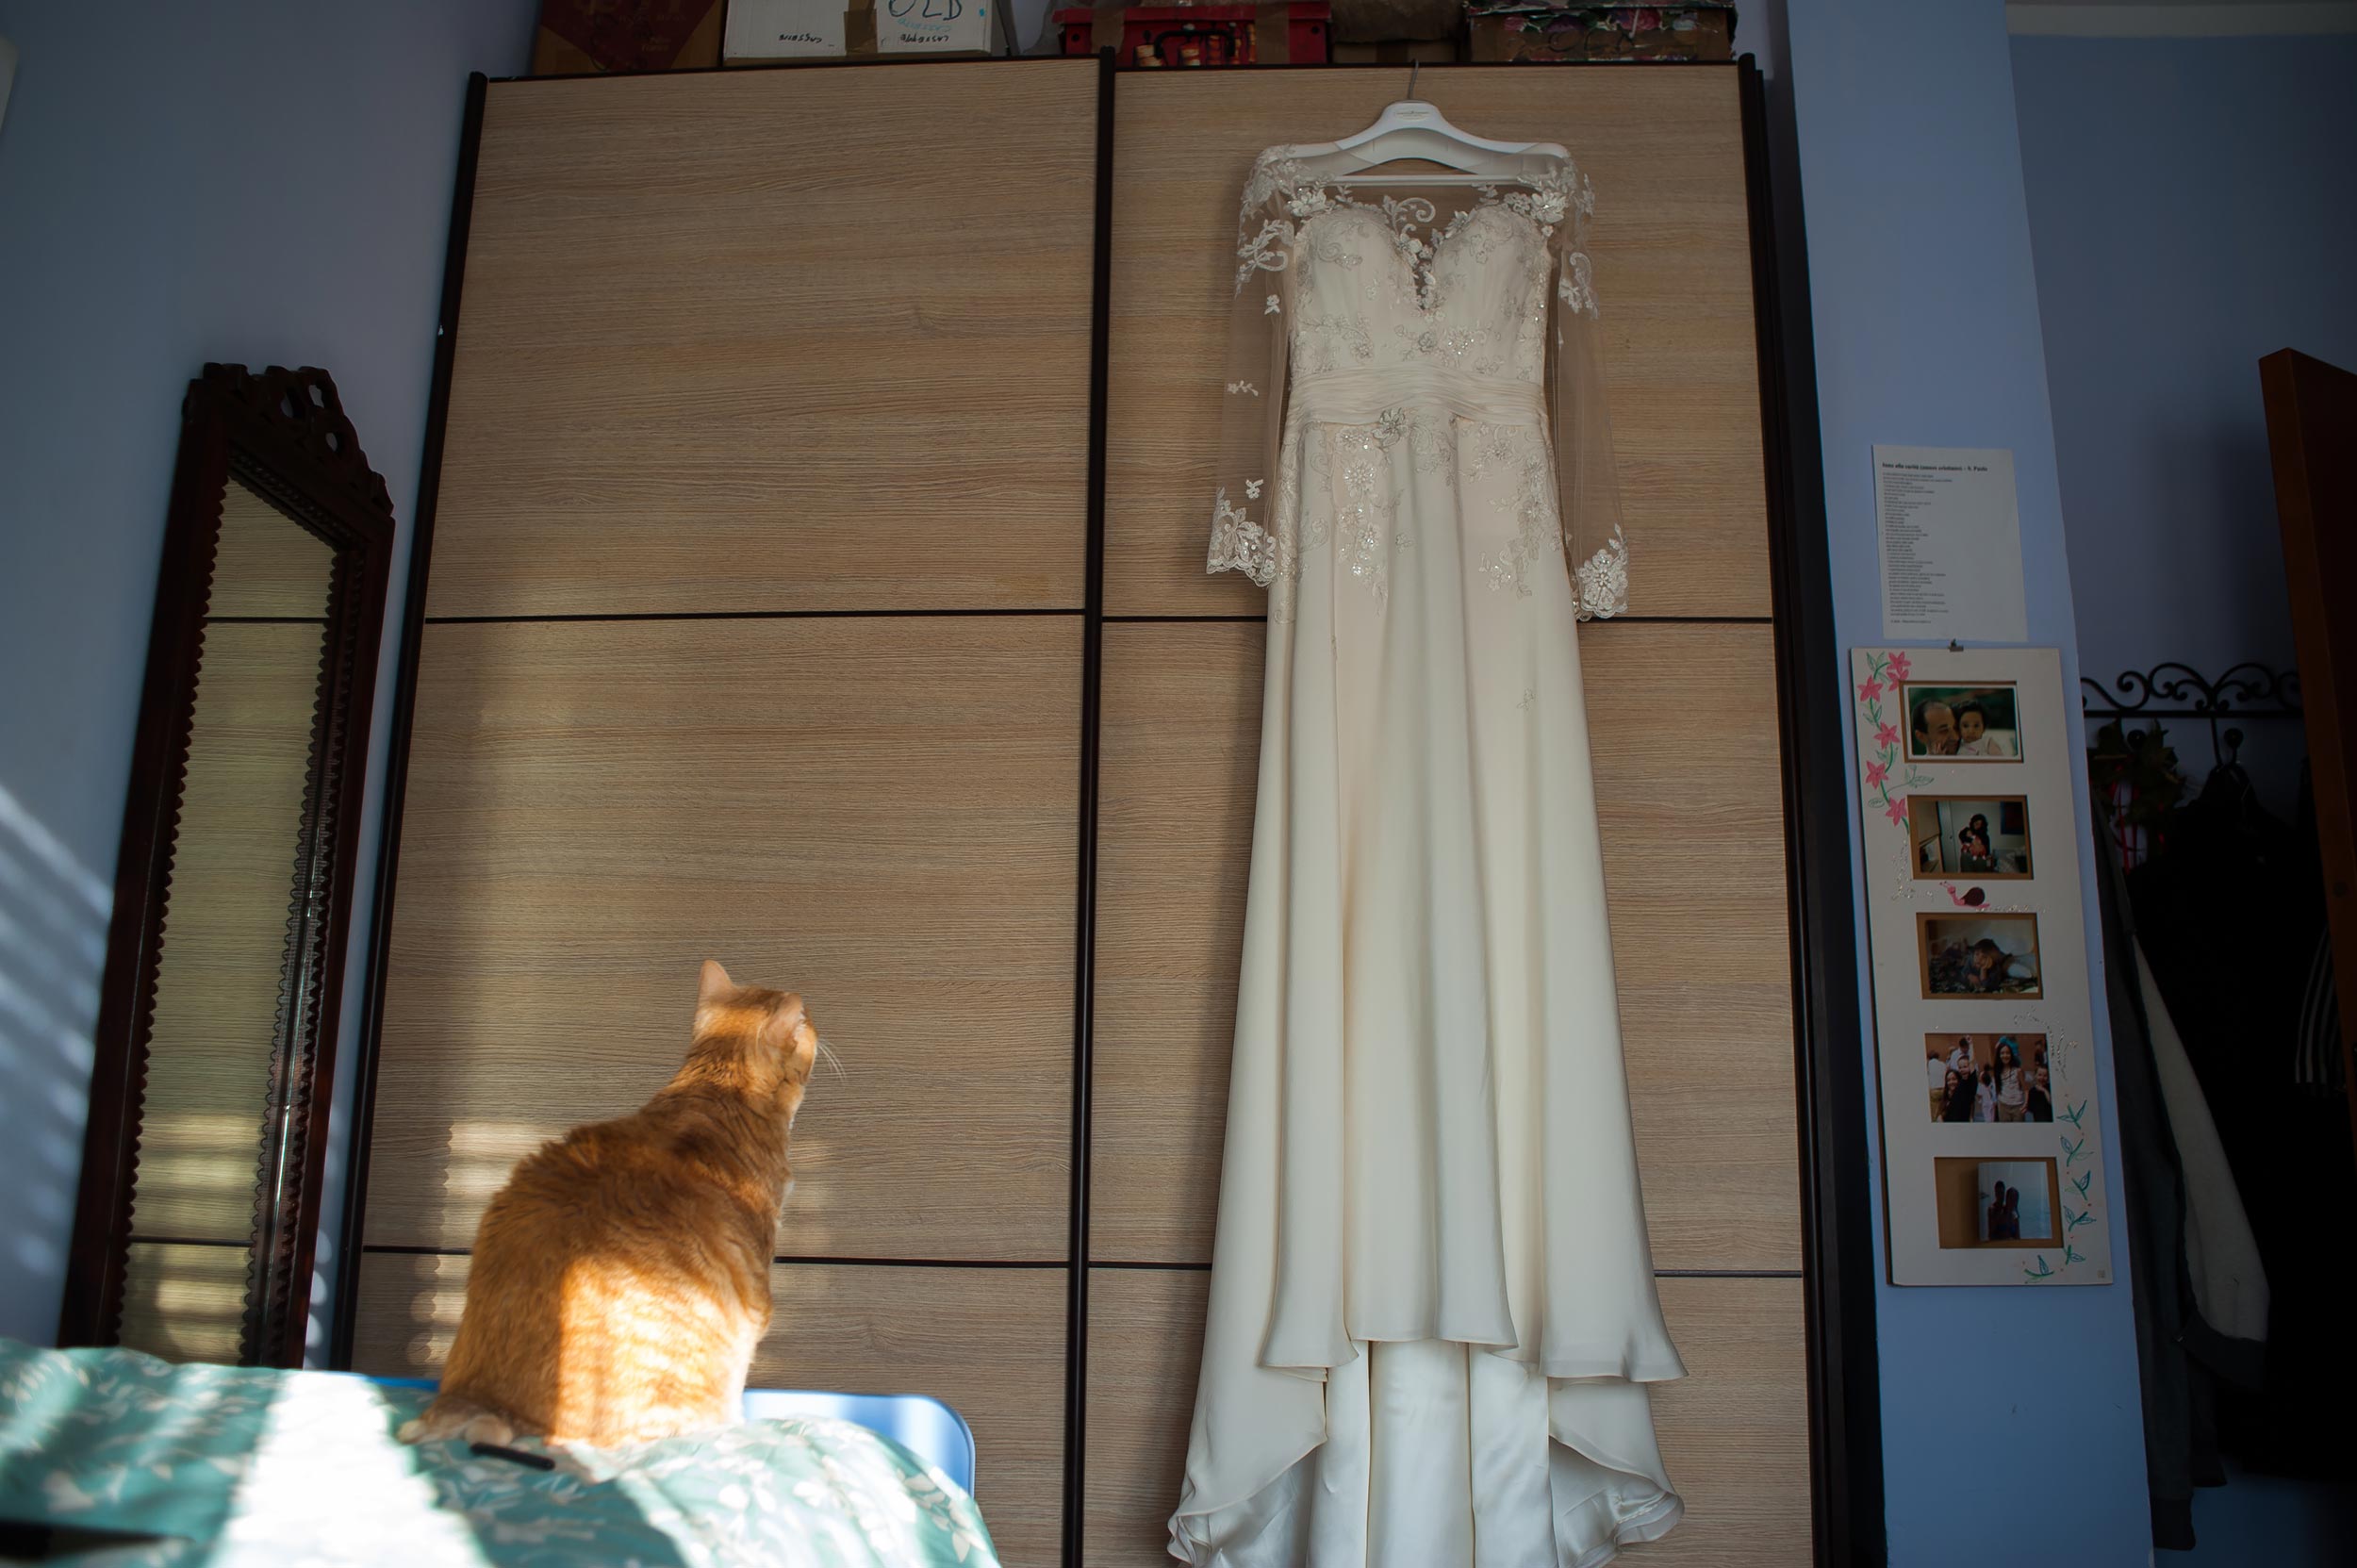 red-cat-admiring-brides-wedding-dress.jpg